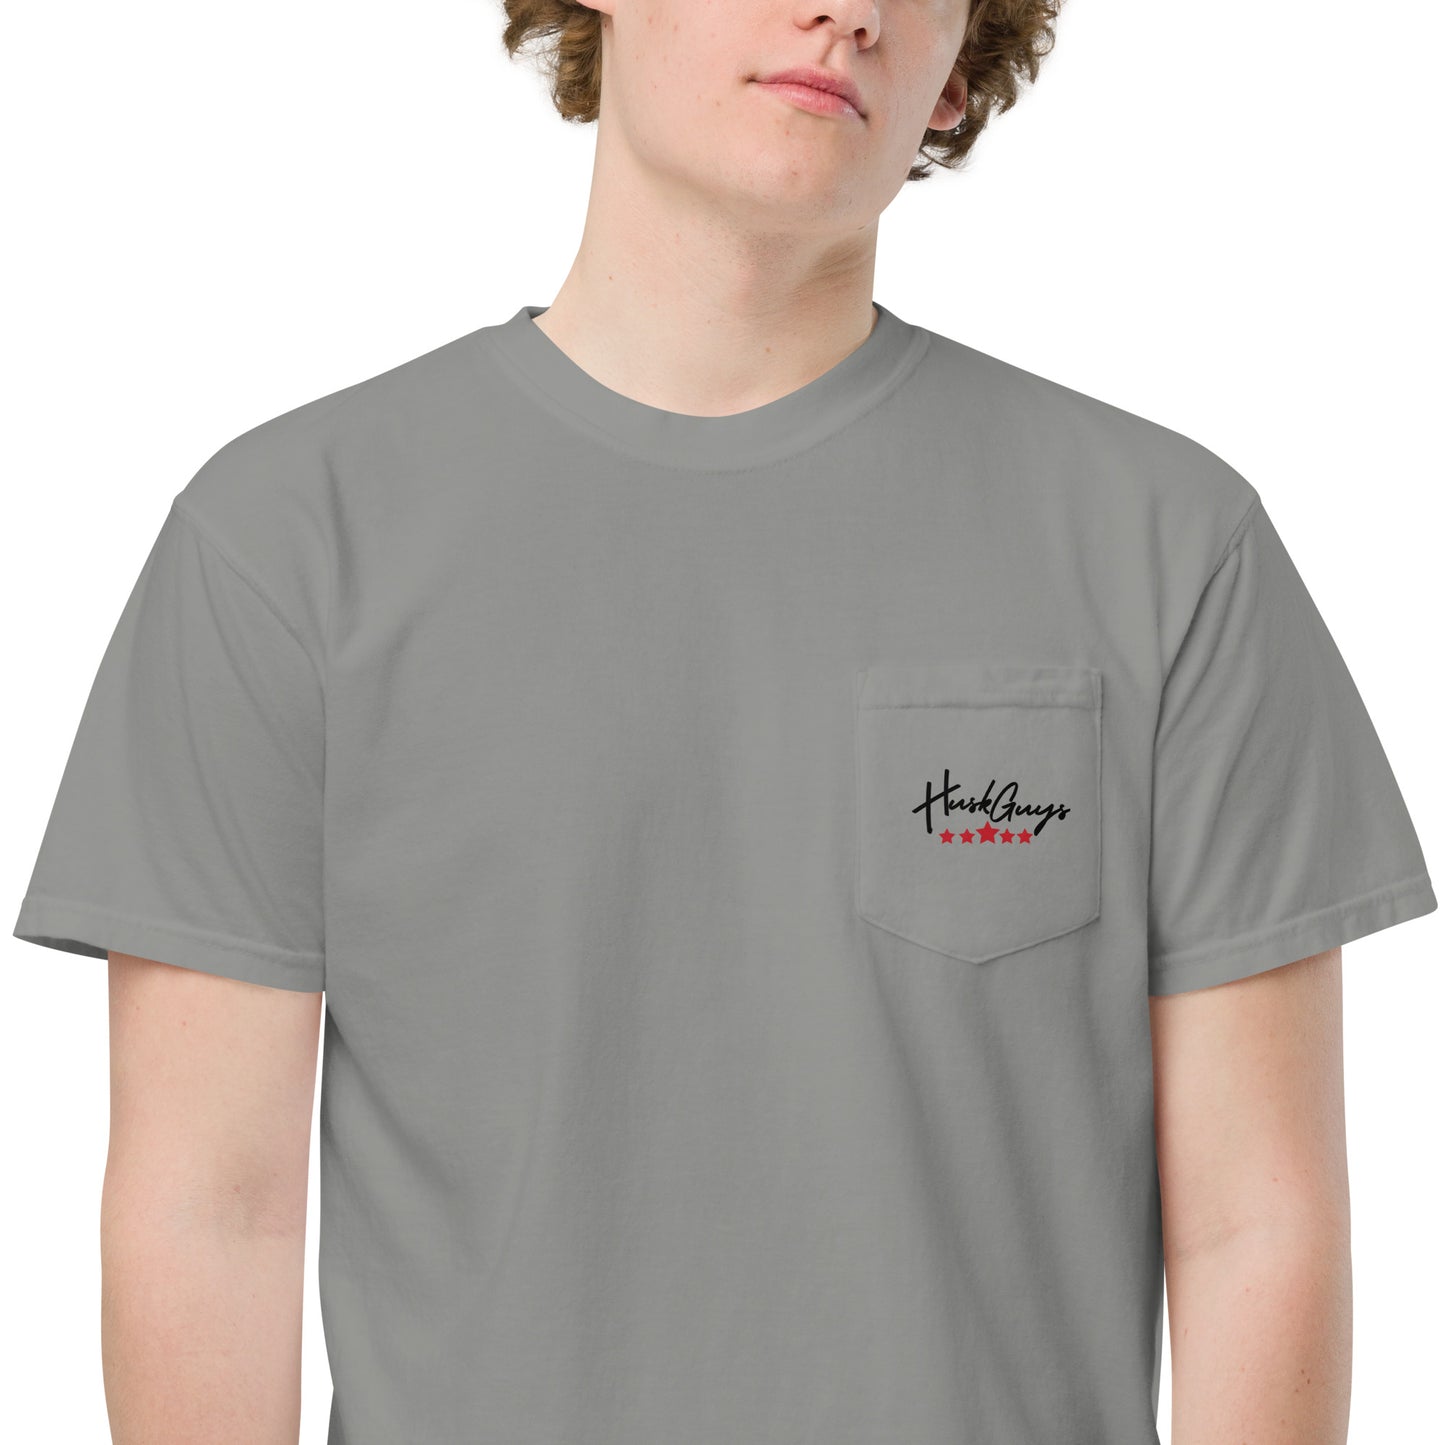 HuskGuys Pocket T-shirt